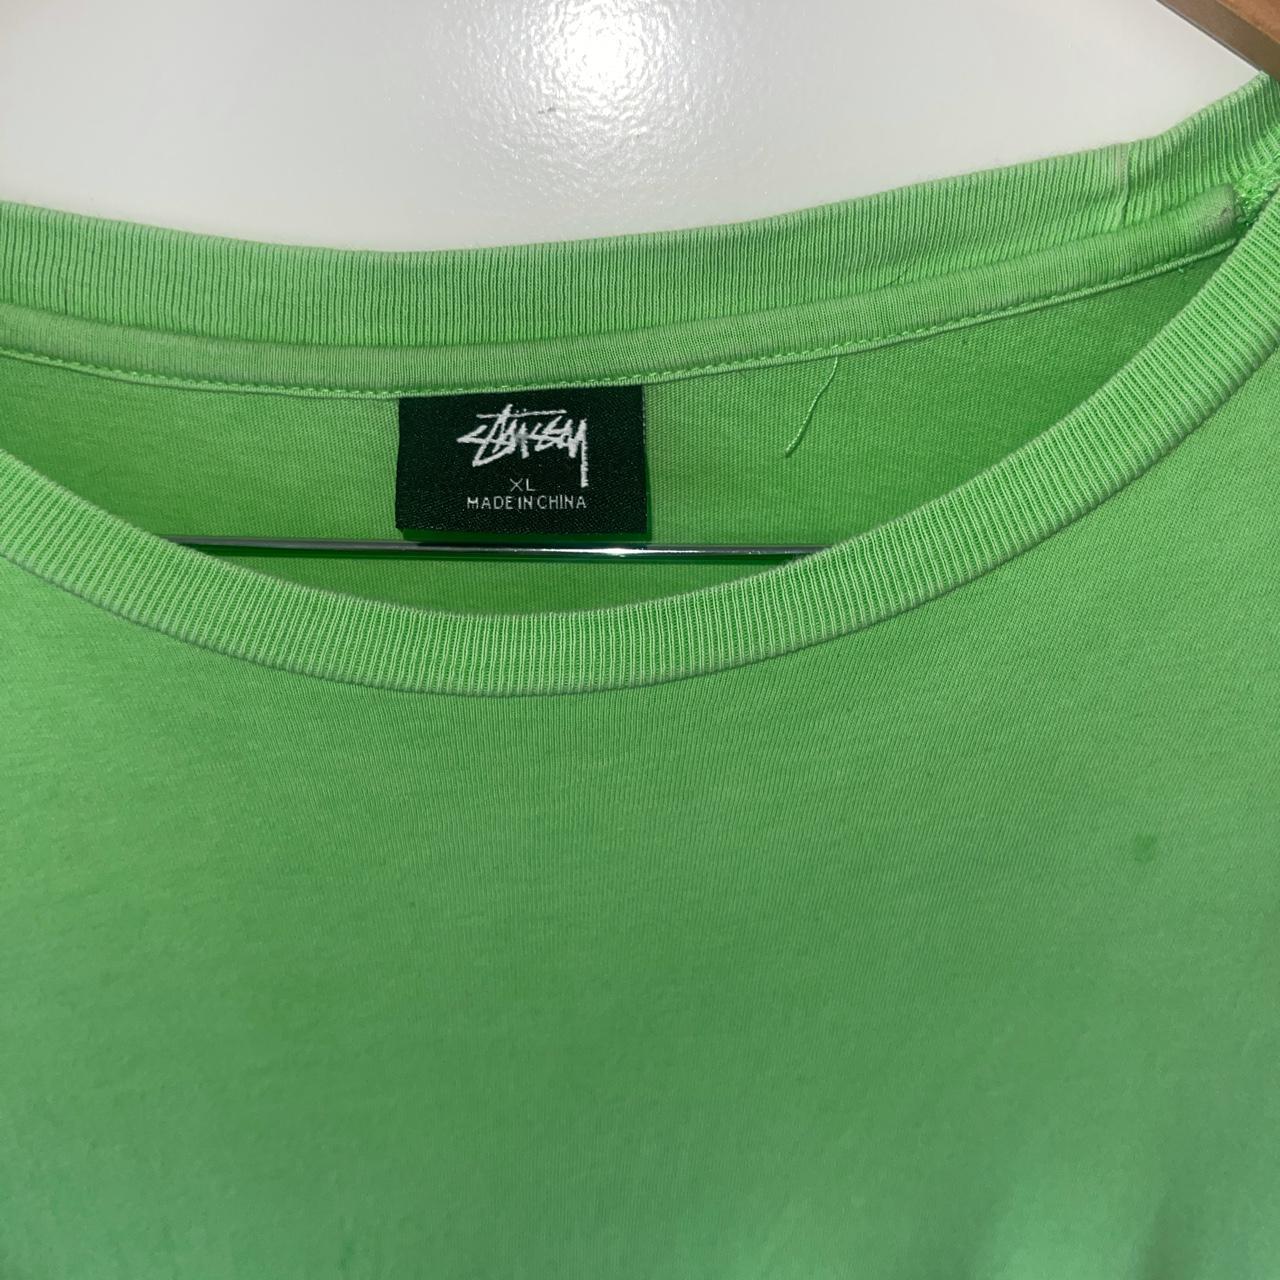 Stussy international soft tshirt - universal store, - Depop